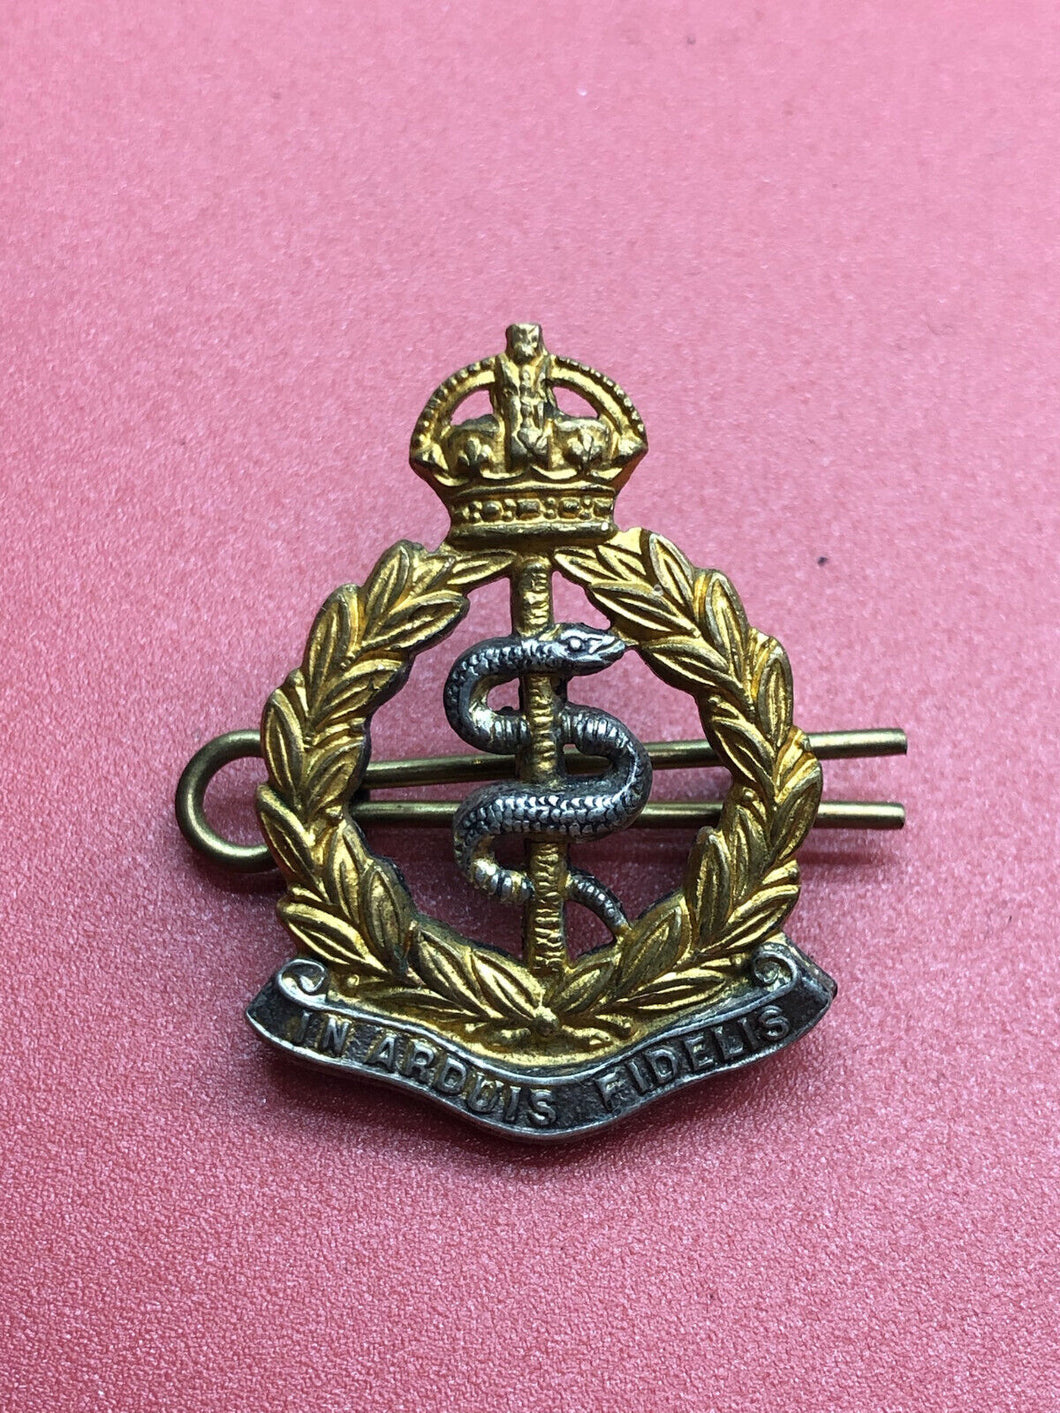 Original WW2 British Army Officers Collar Badge - RAMC Royal Army Medical Corps